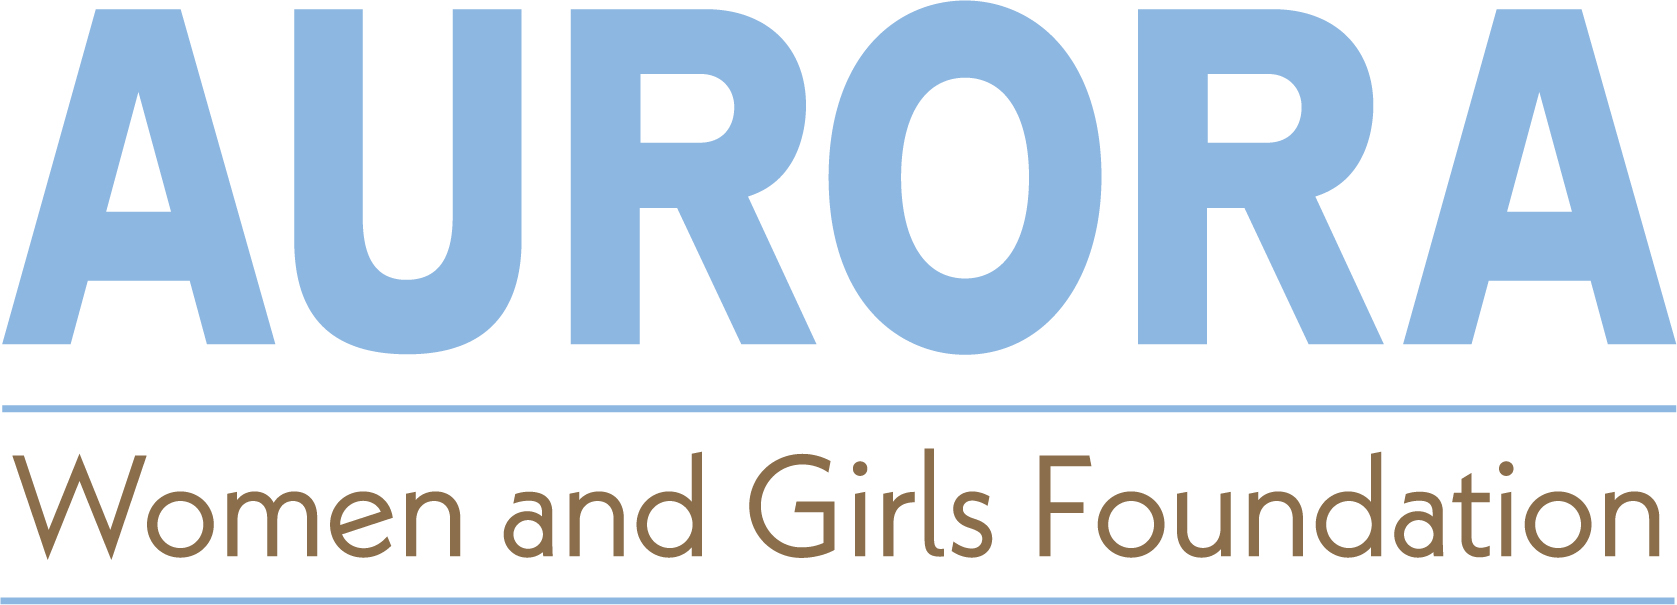 Aurora Women and Girls Foundation logo